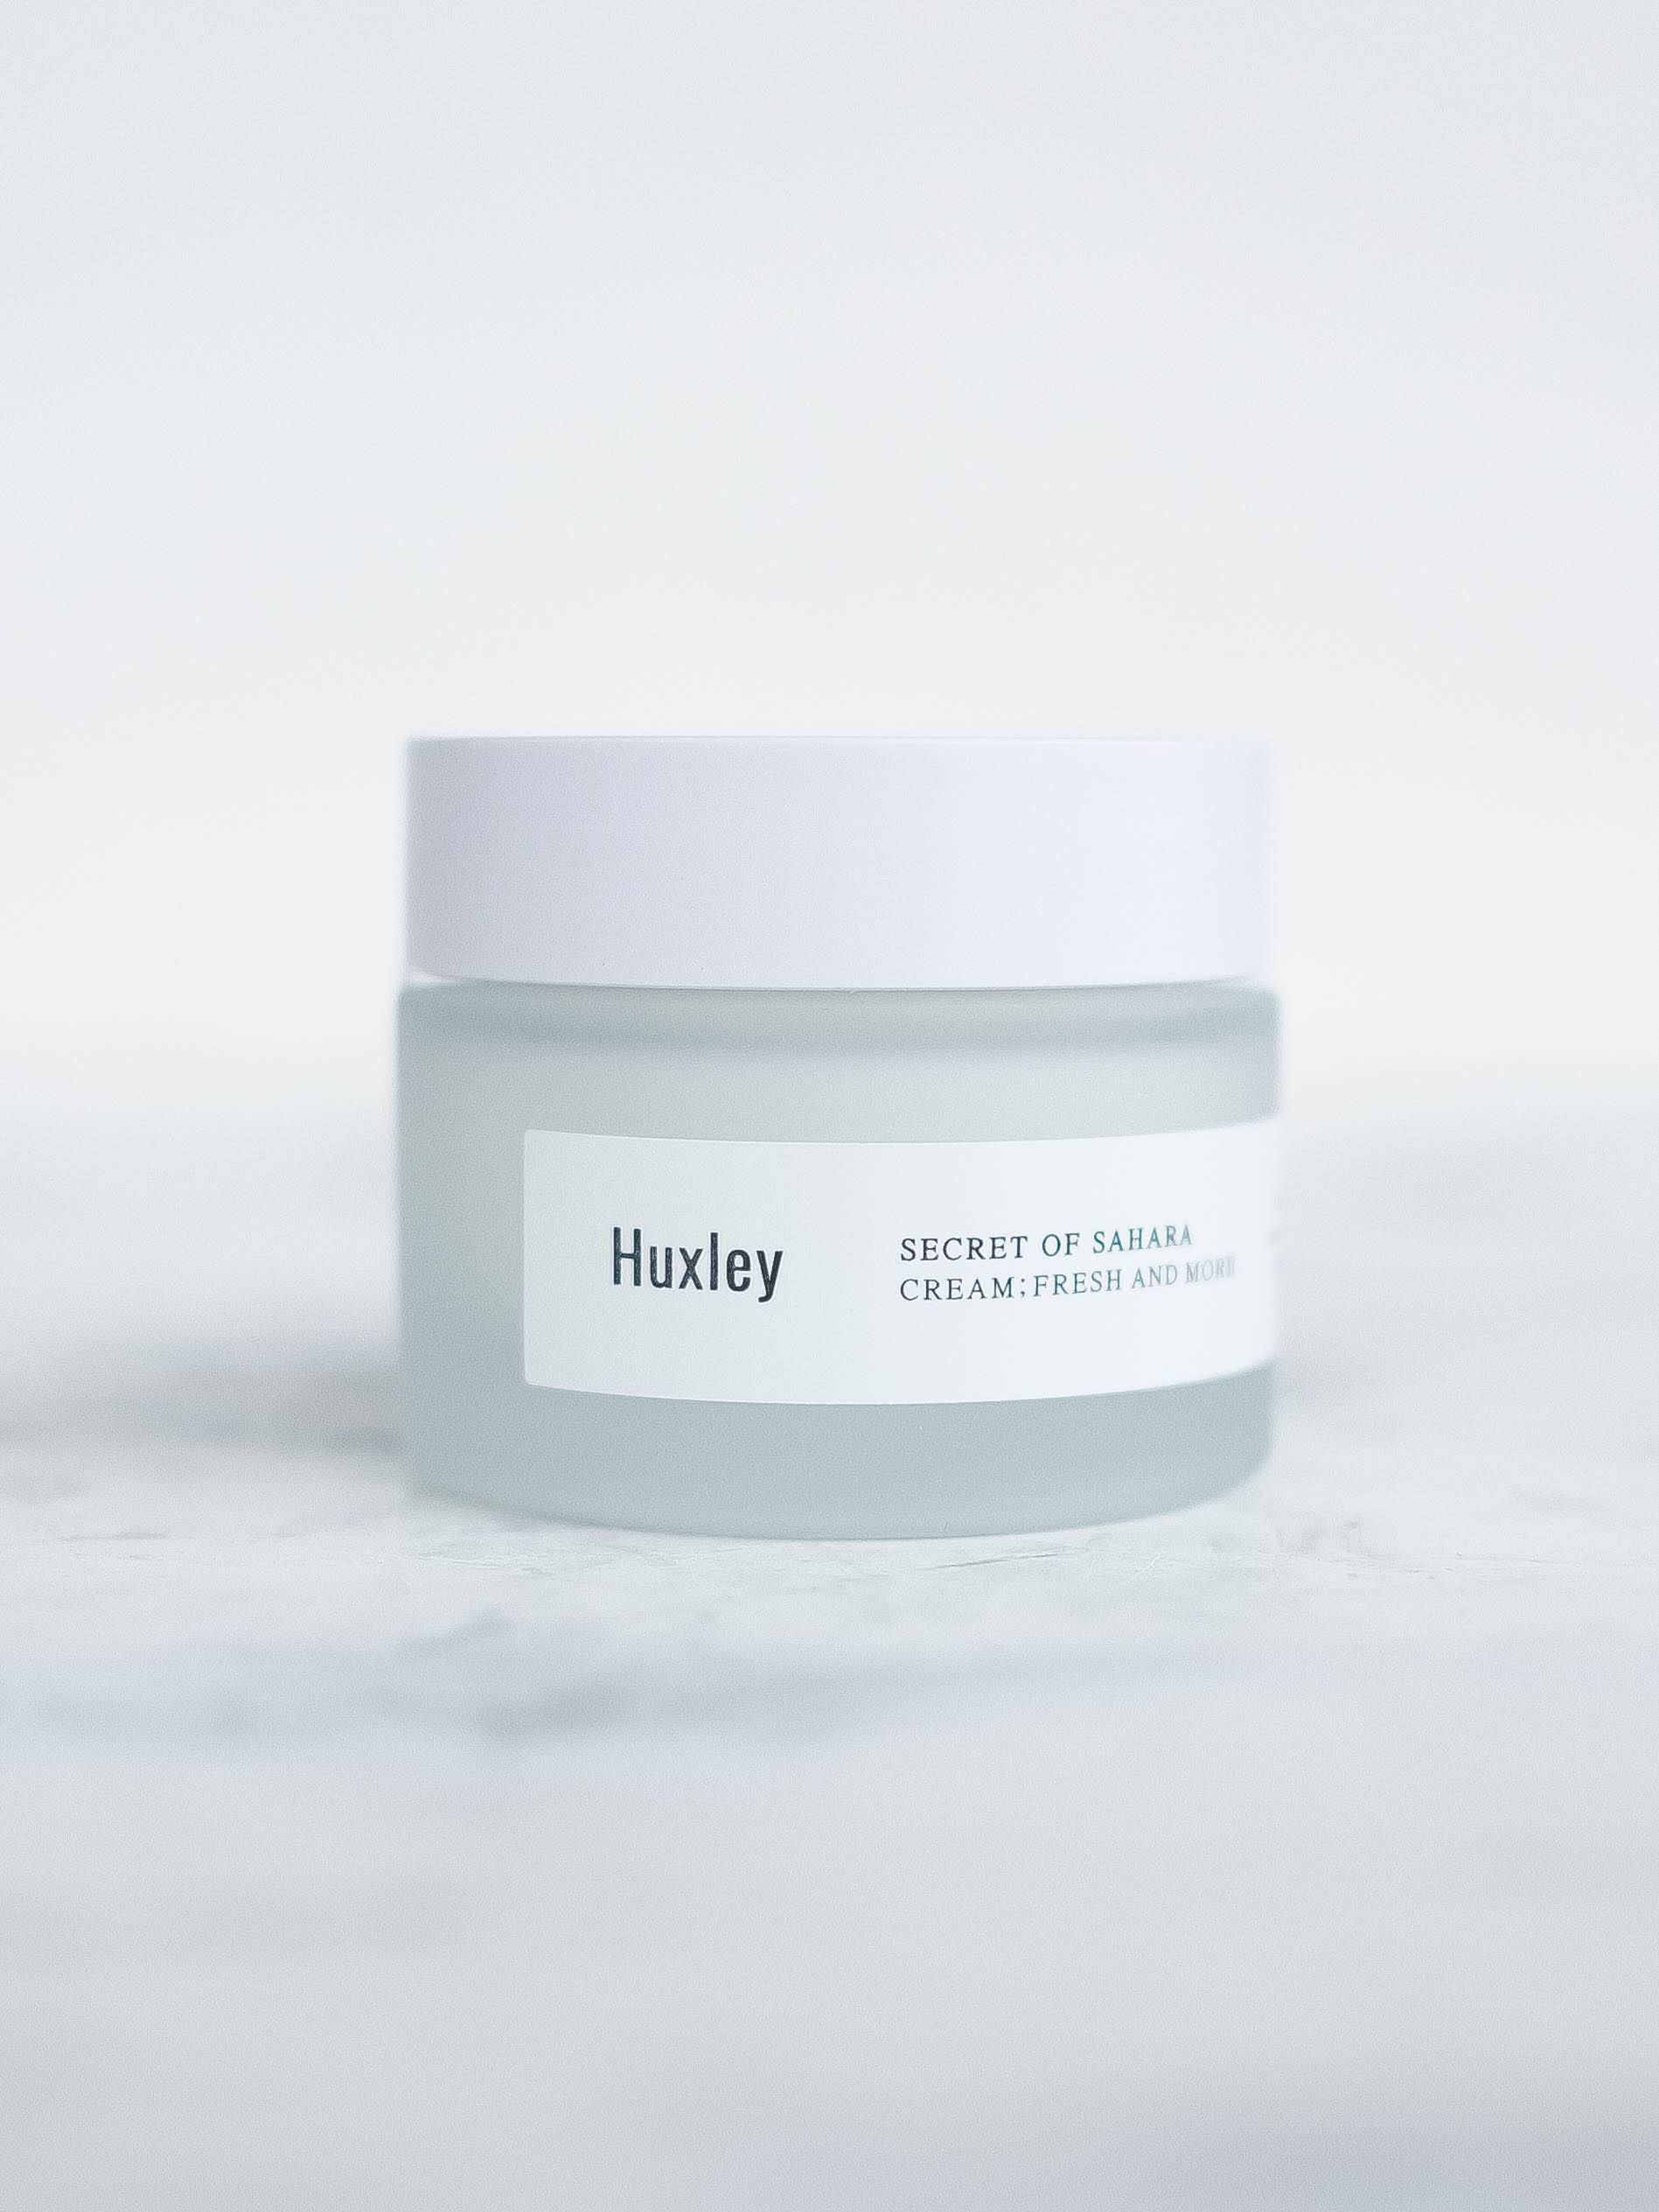 Huxley Cream: Fresh And More 50ml